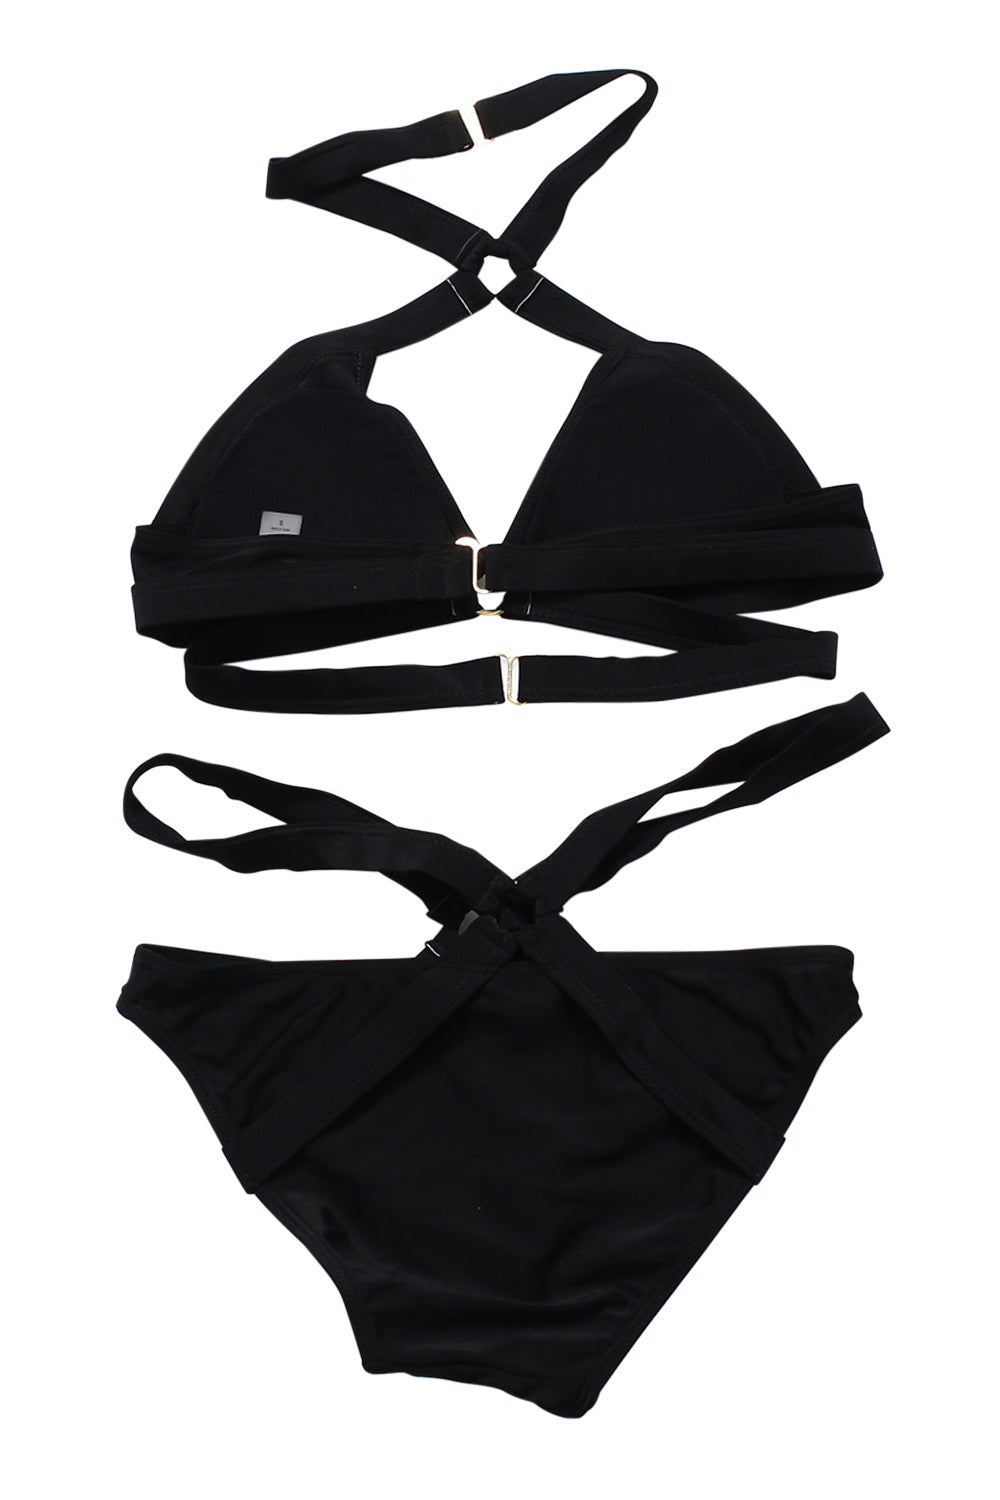 Iyasson Sexy Black Front Cross Triangle Top Bikini Set